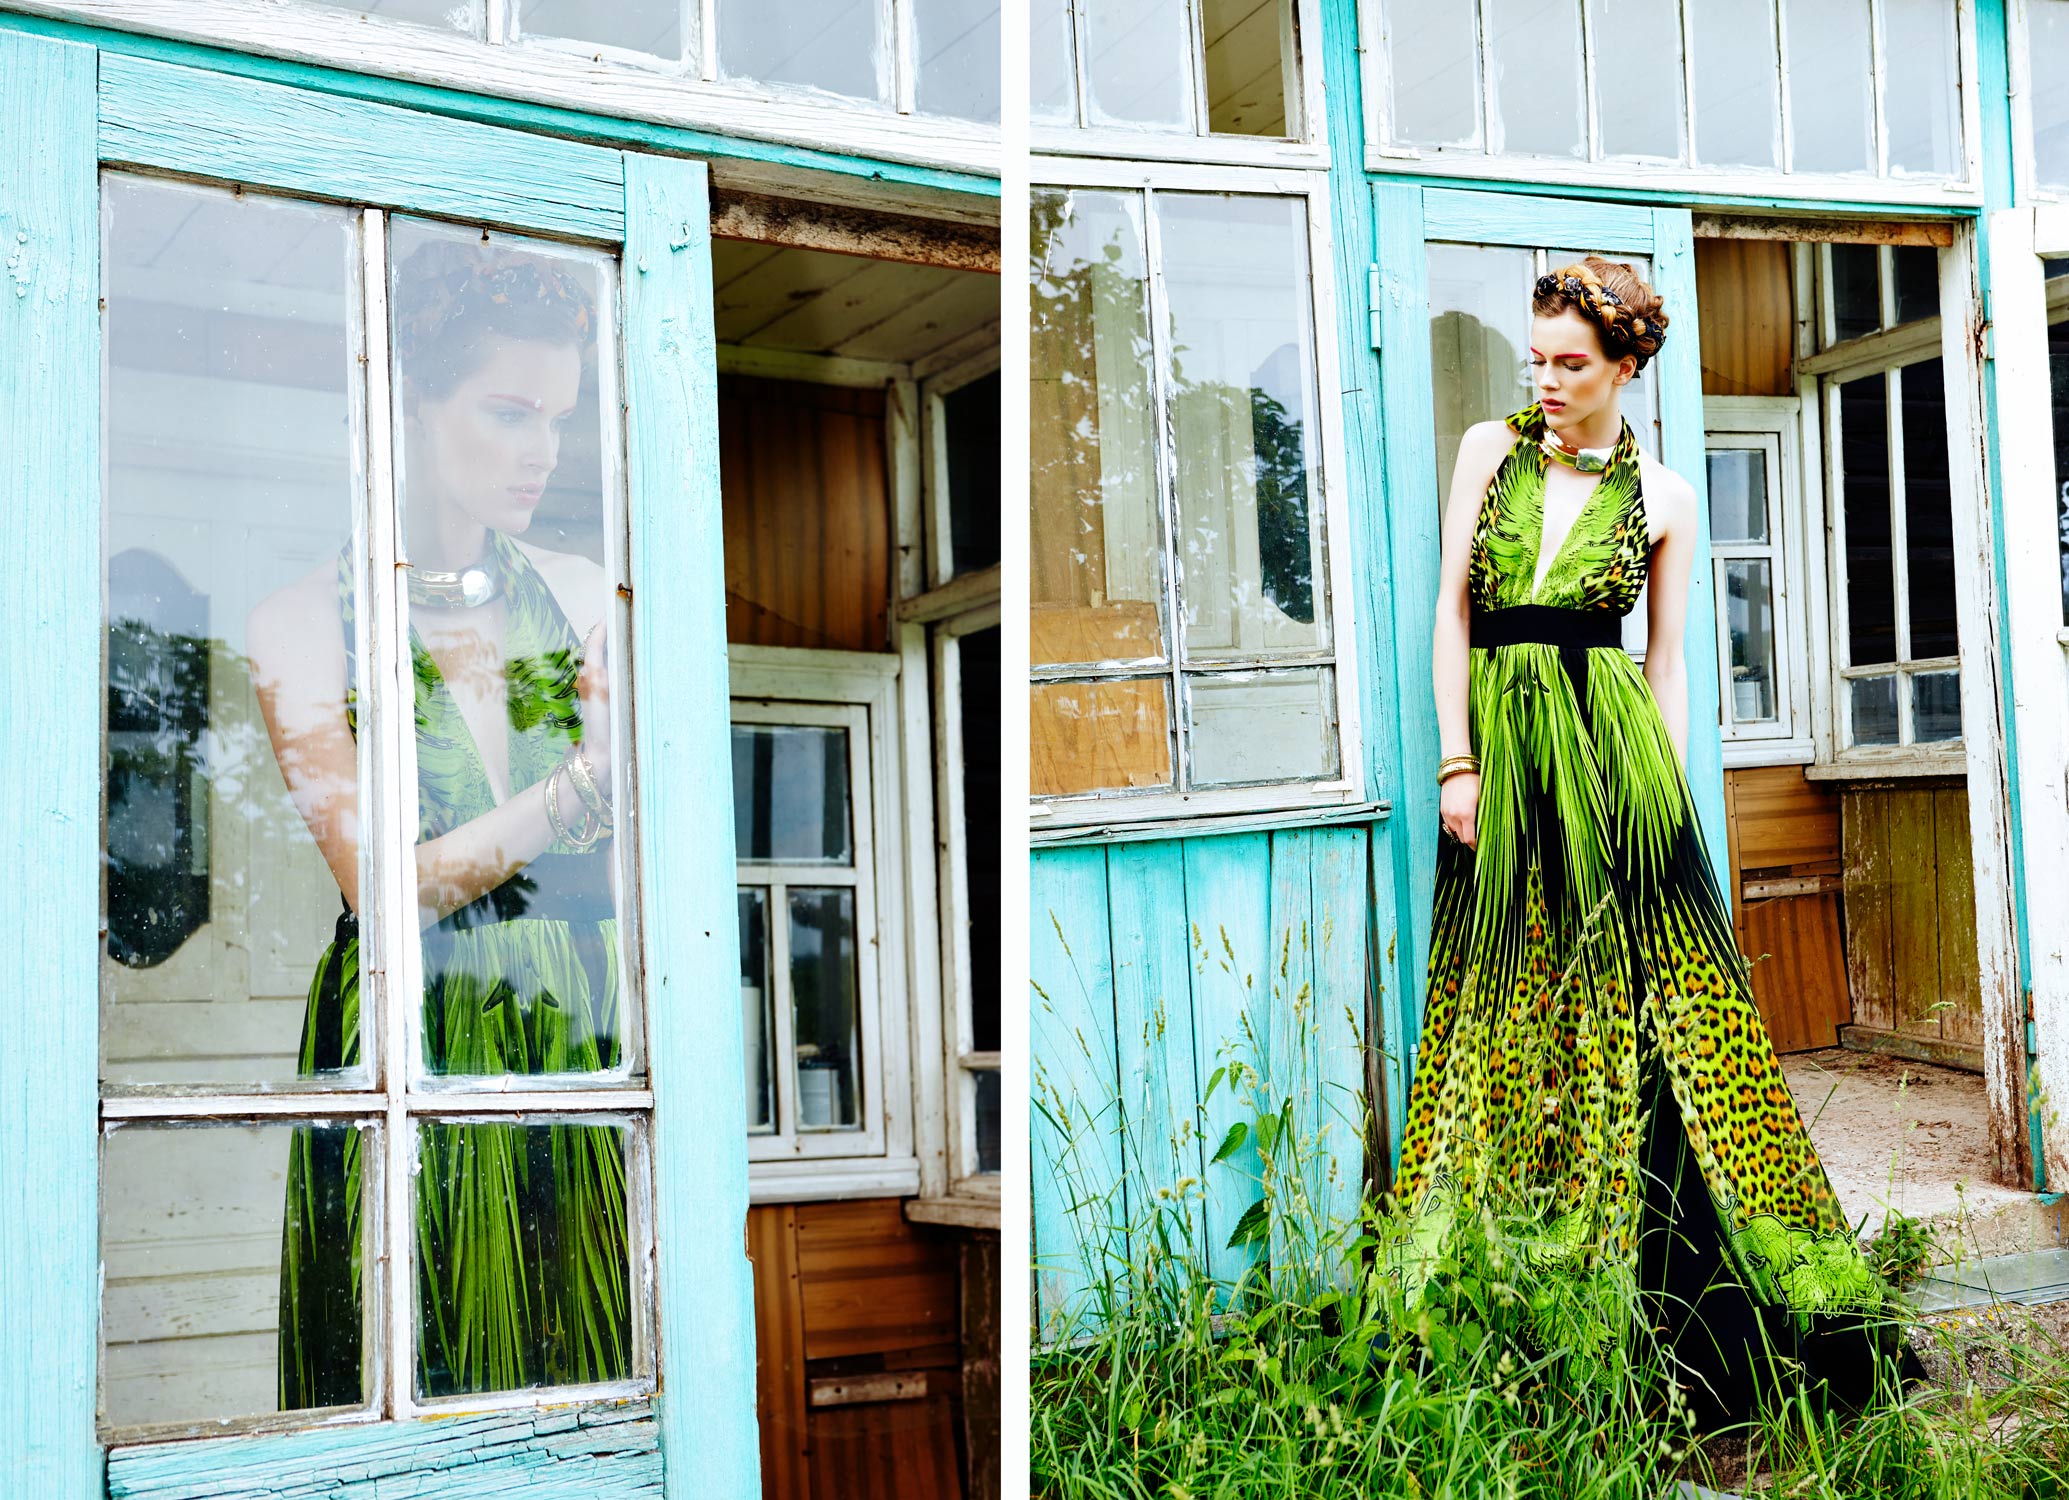 <p>Laura Jaraminaitė<br />
Dress by Just Cavalli<br />
Velvet magazine<br />
UAE<br />
2013</p>
